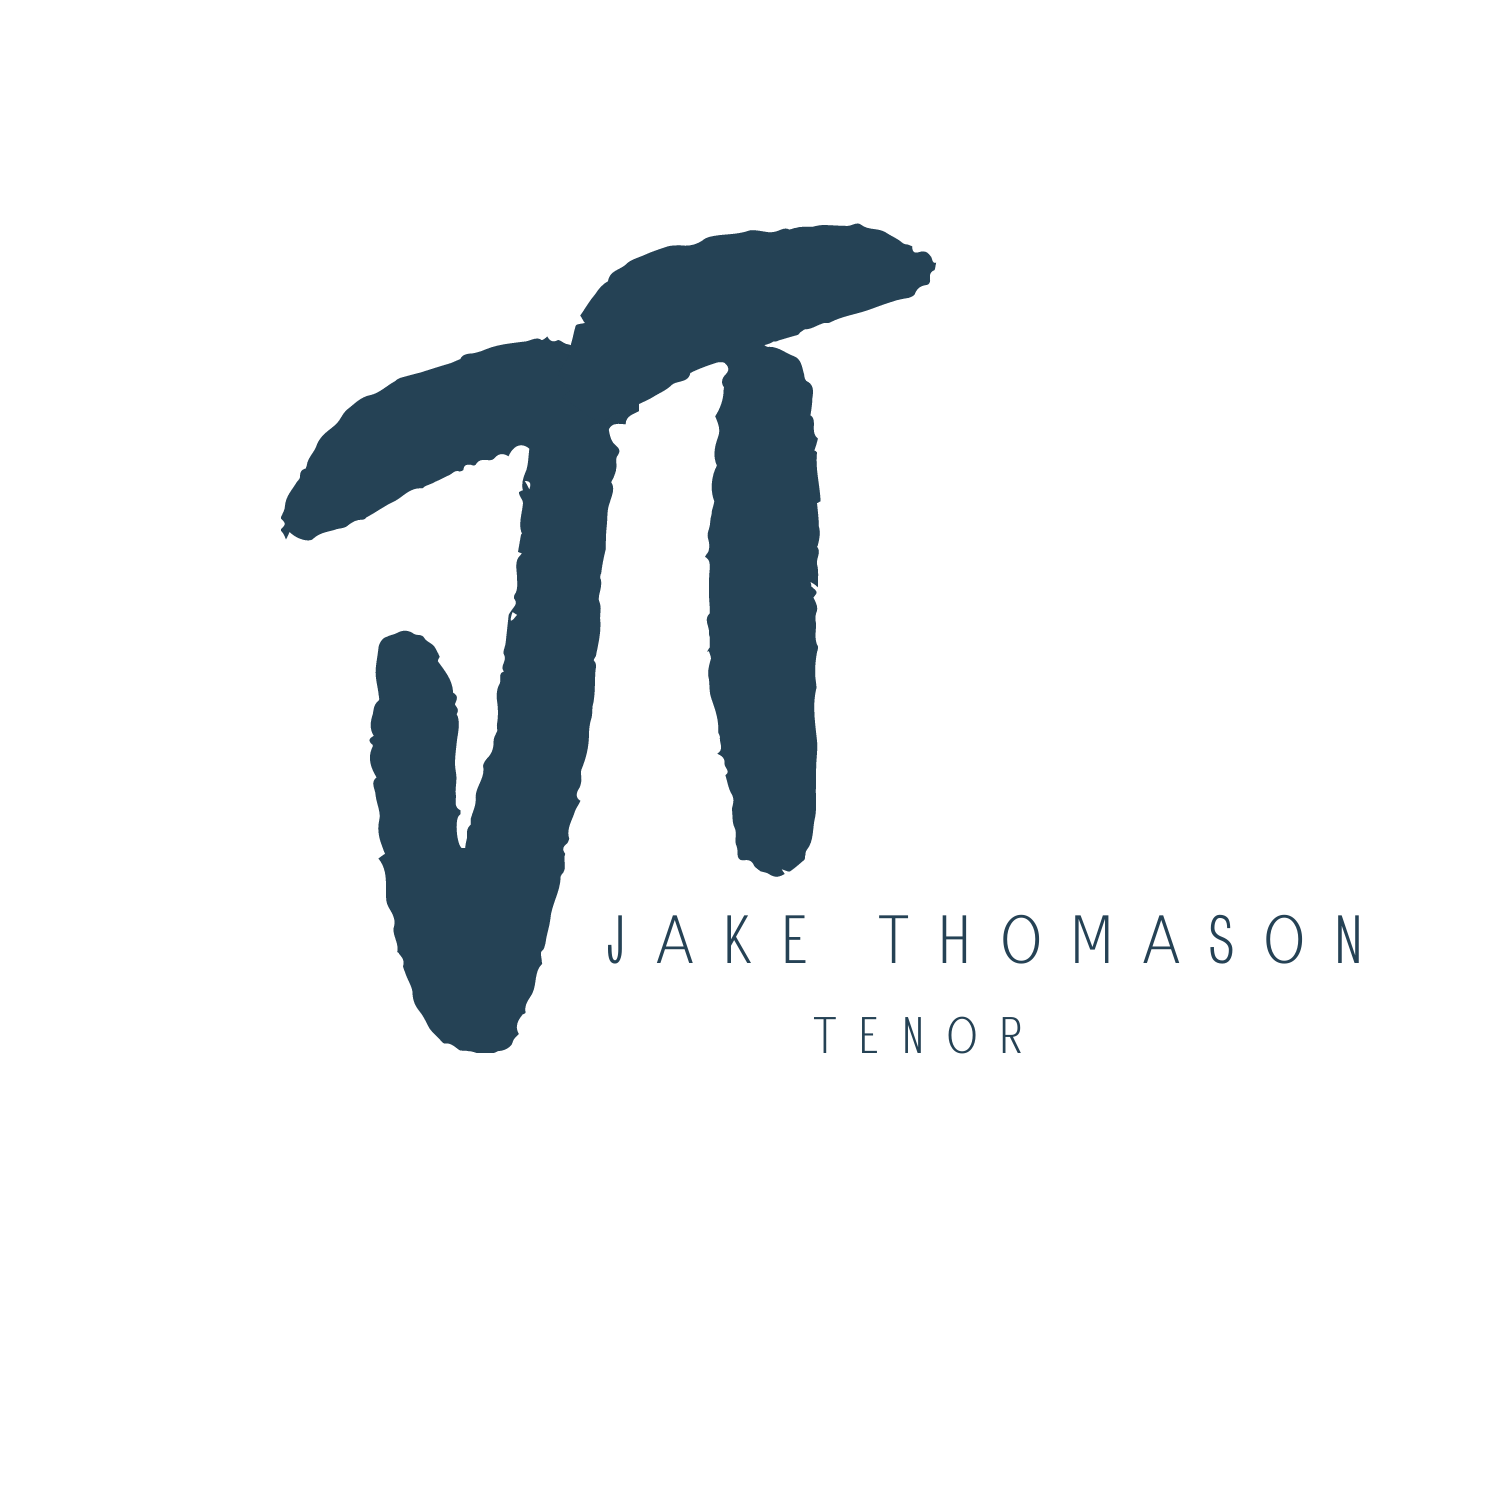 Jake Thomason